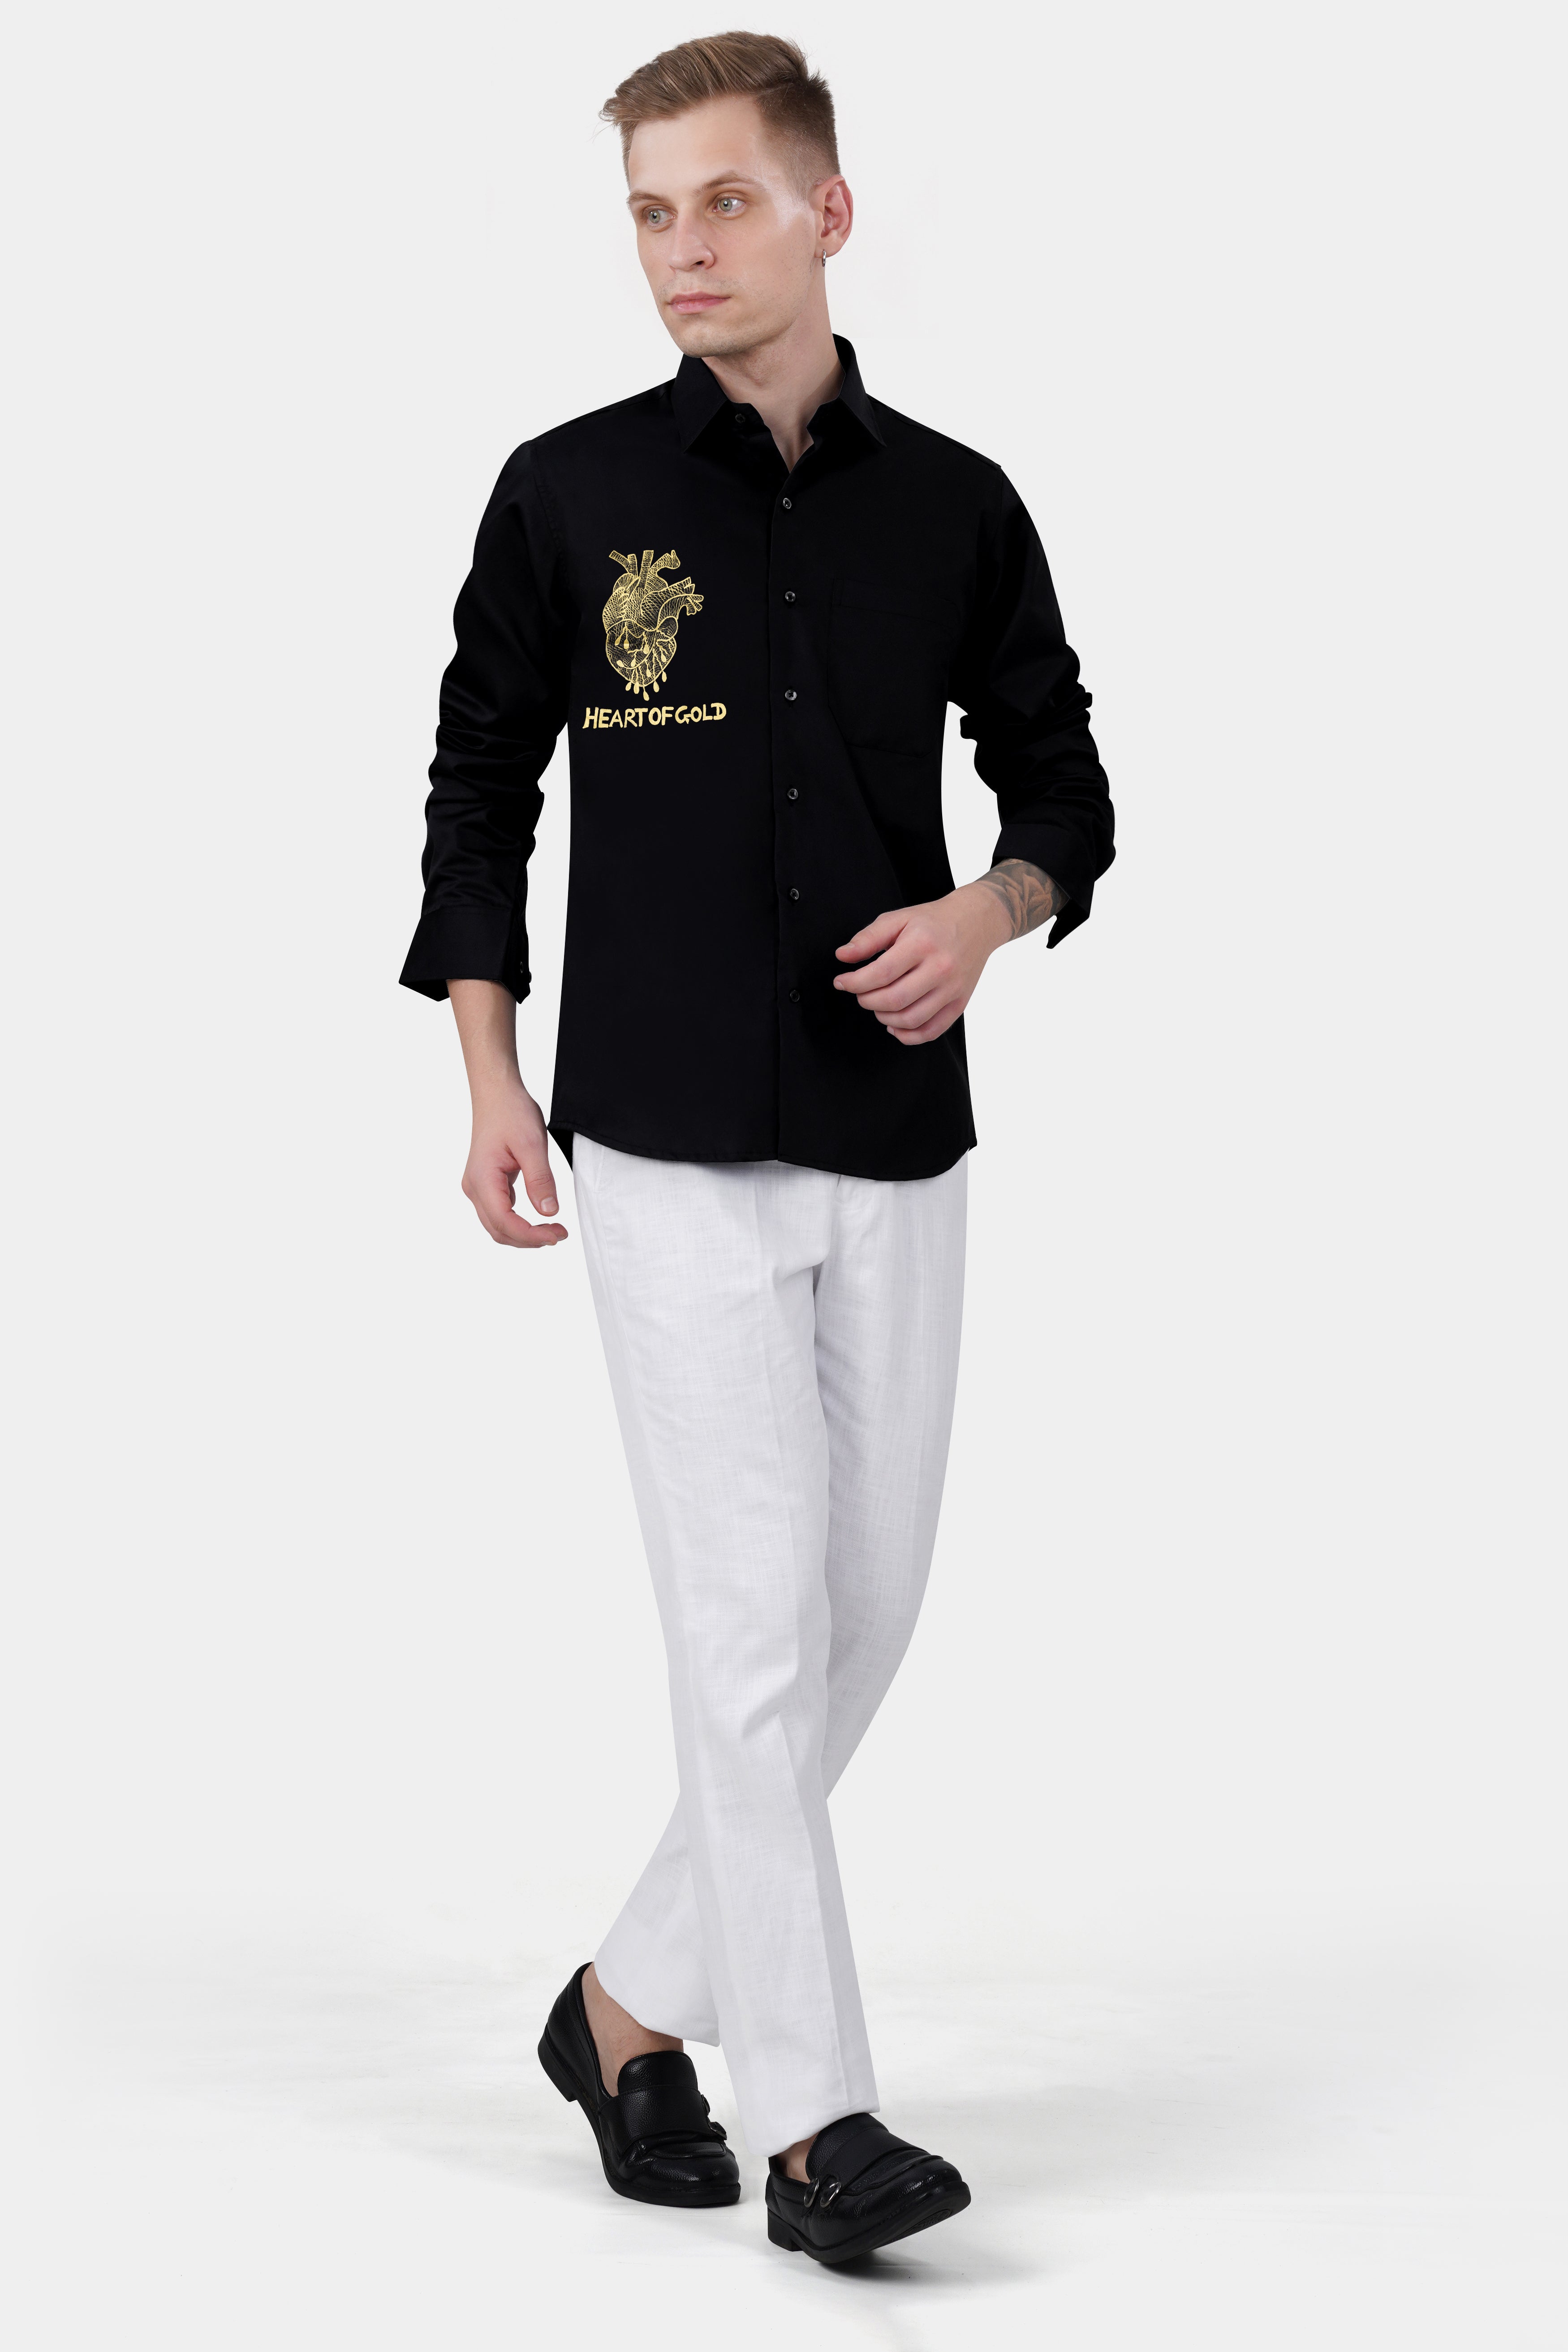 Jade Black With Hand Painted Heart of Gold Super Soft premium Cotton Designer Shirt